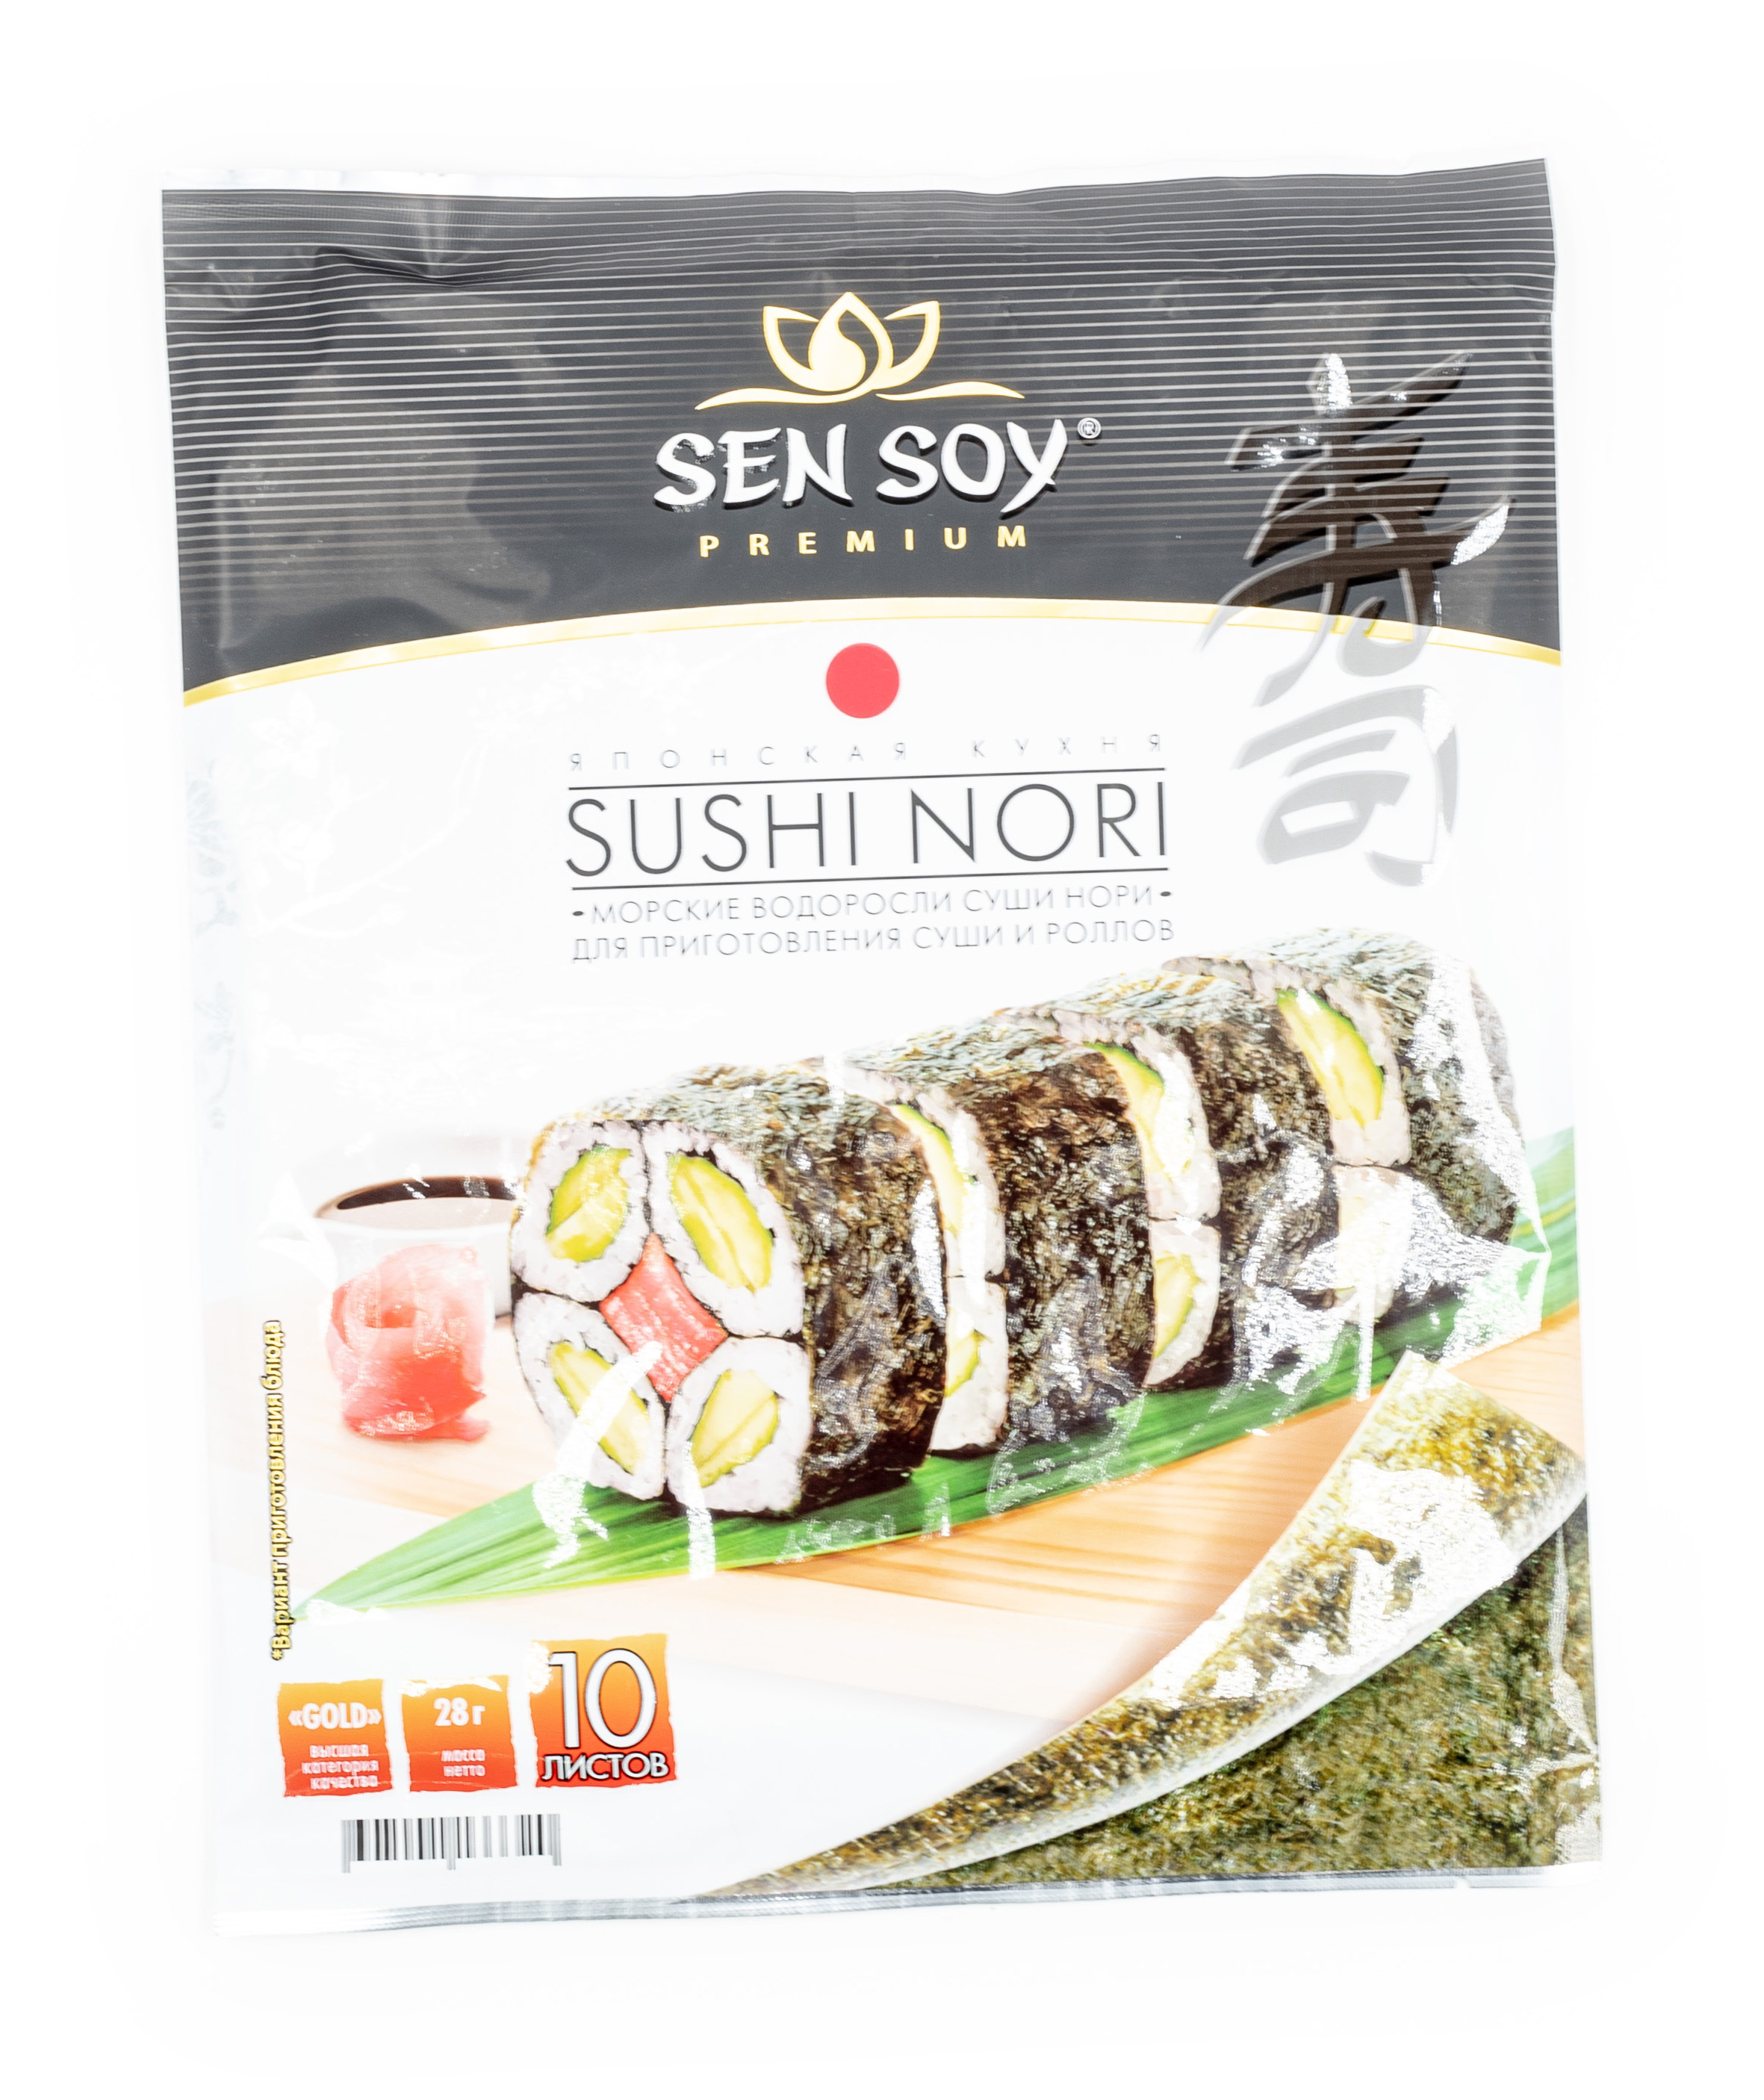 Sen soy набор для суши цена фото 42